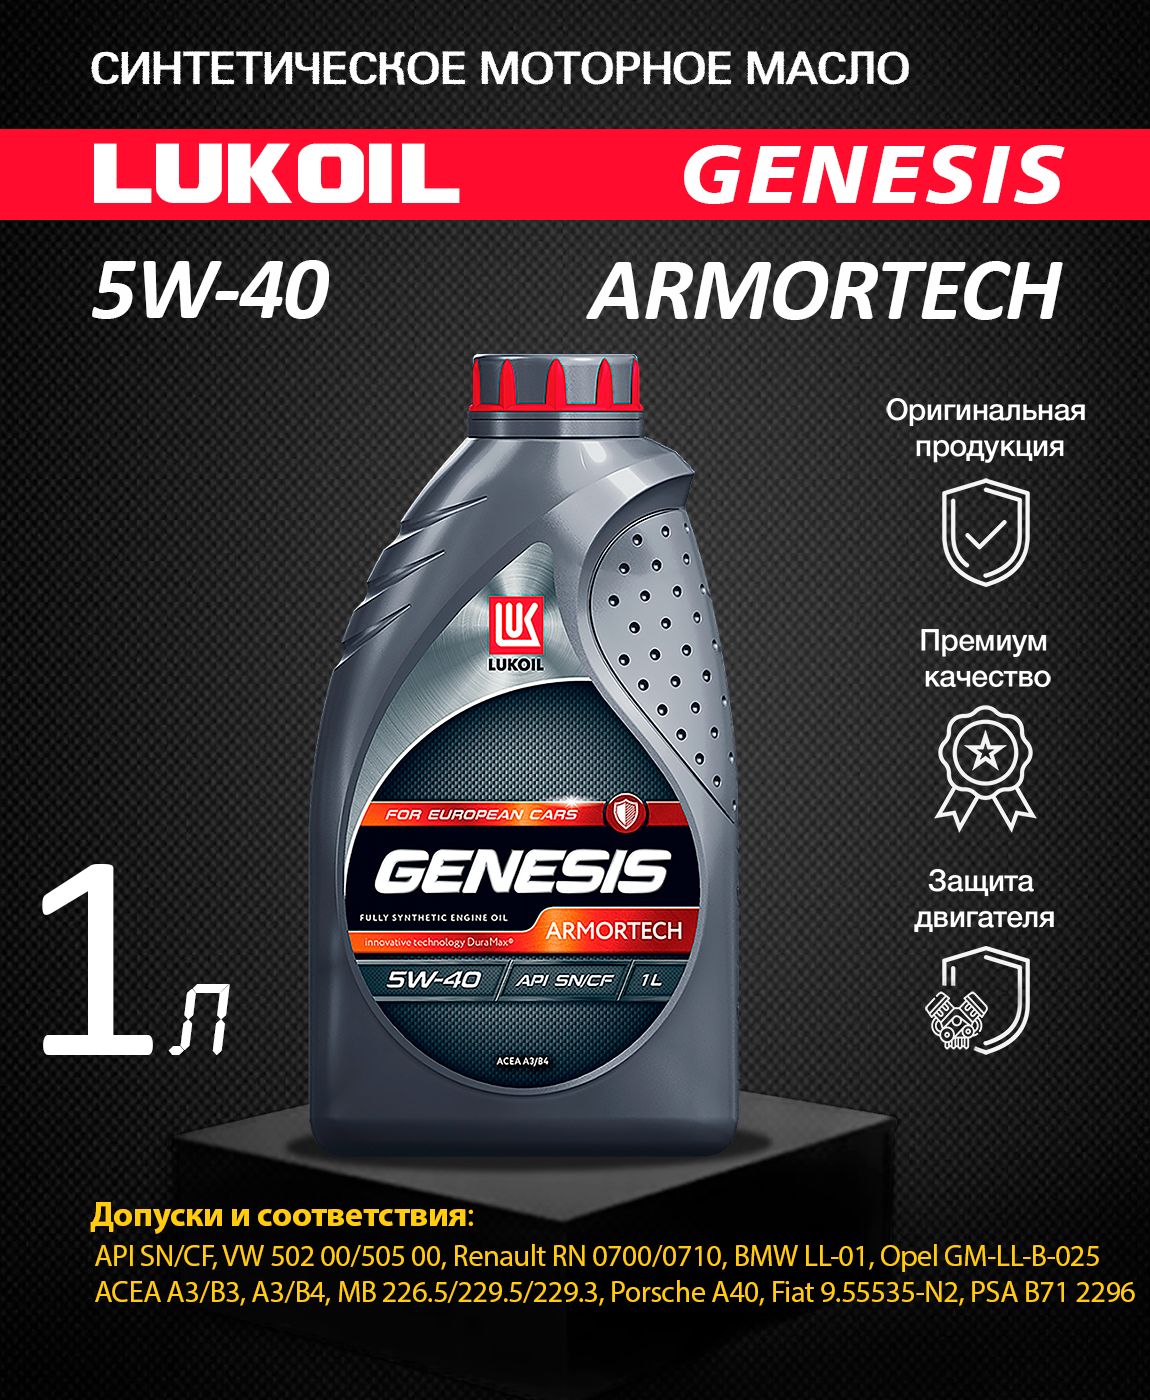 Лукойл Genesis Armortech 5w-40 1л. Lukoil Genesis Armortech 5w-40 1л. 1607013 Lukoil Genesis Armortech 5w-40 5л. Genesis Armortech for European cars 5w-40. Armortech 5w40 отзывы